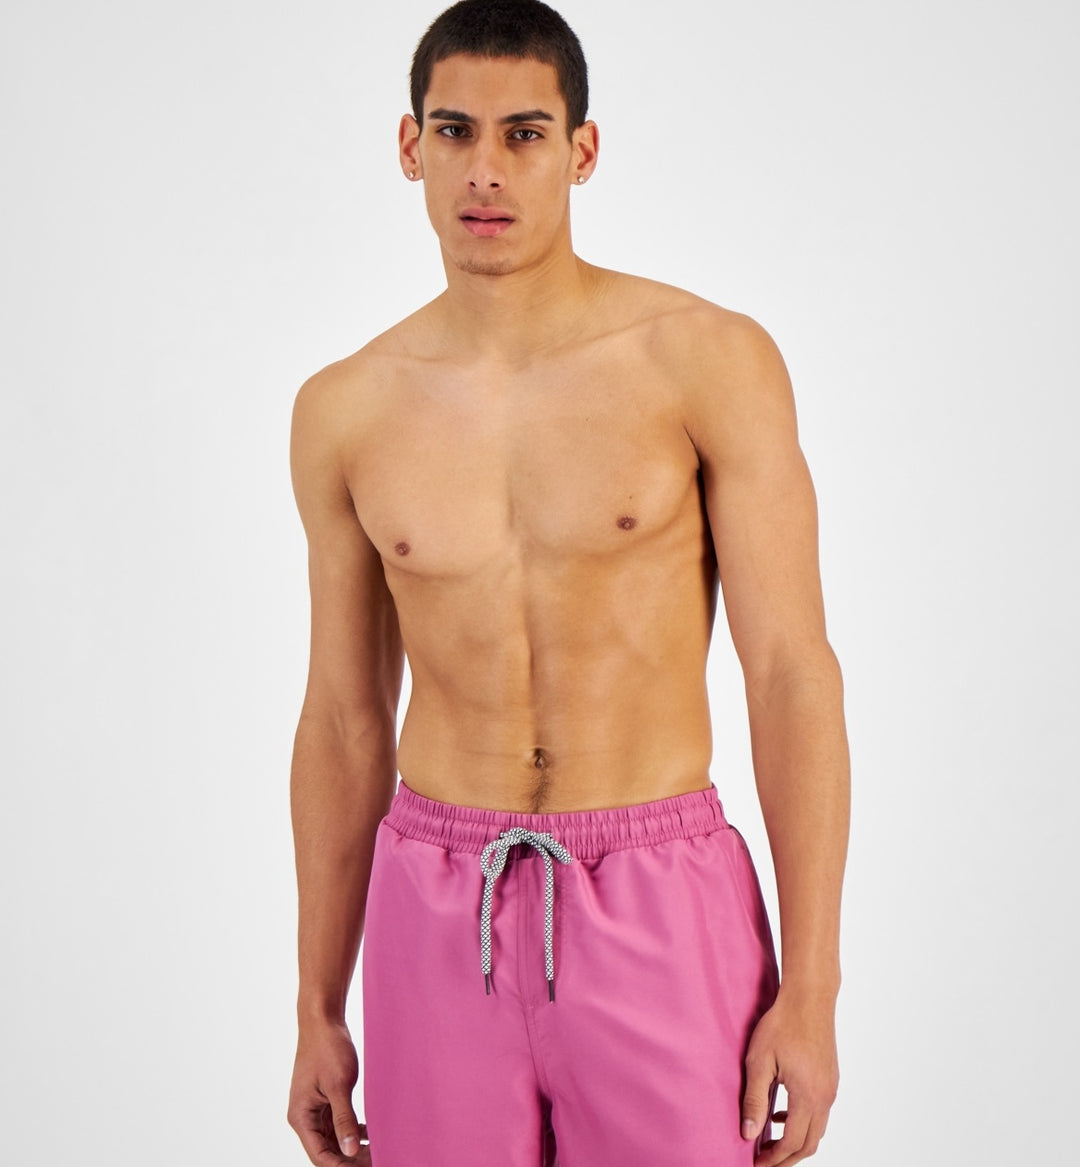 INC International Concepts Men's Regular Fit Quick Dry Solid 5 Swim Trunks Pink Size X-Large